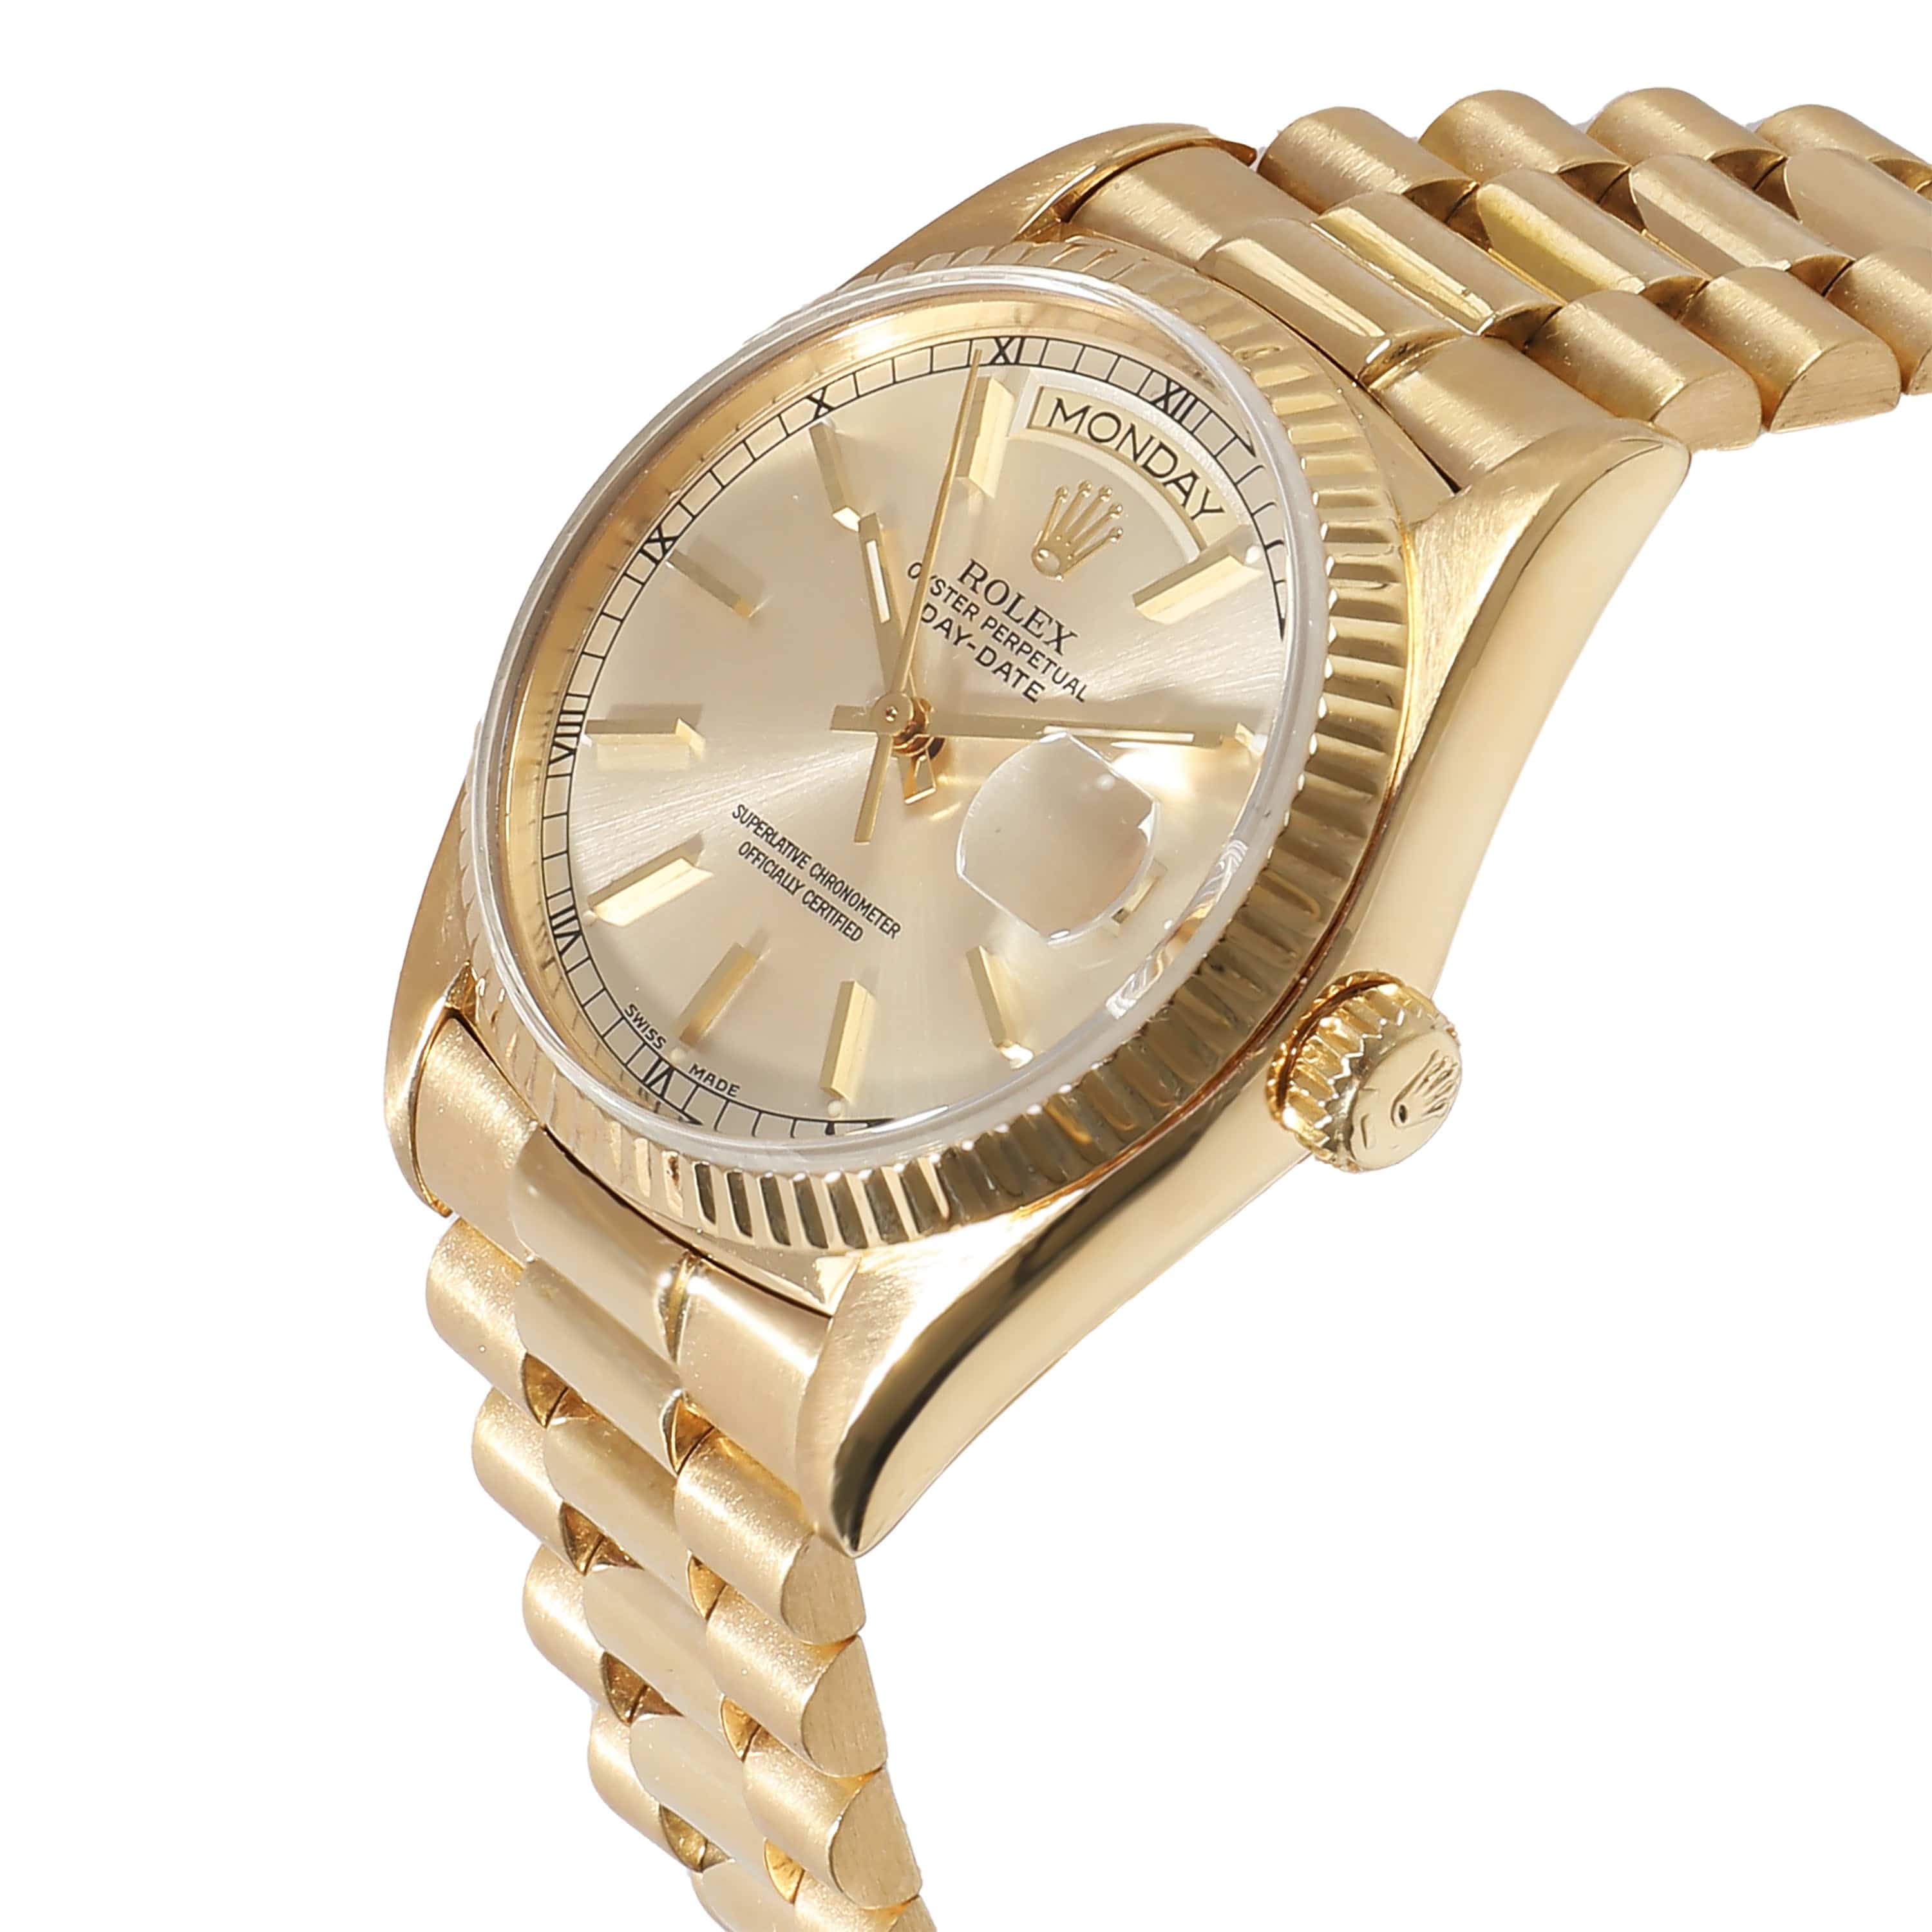 Rolex Rolex Day-Date 18038 Men's Watch in 18kt Yellow Gold